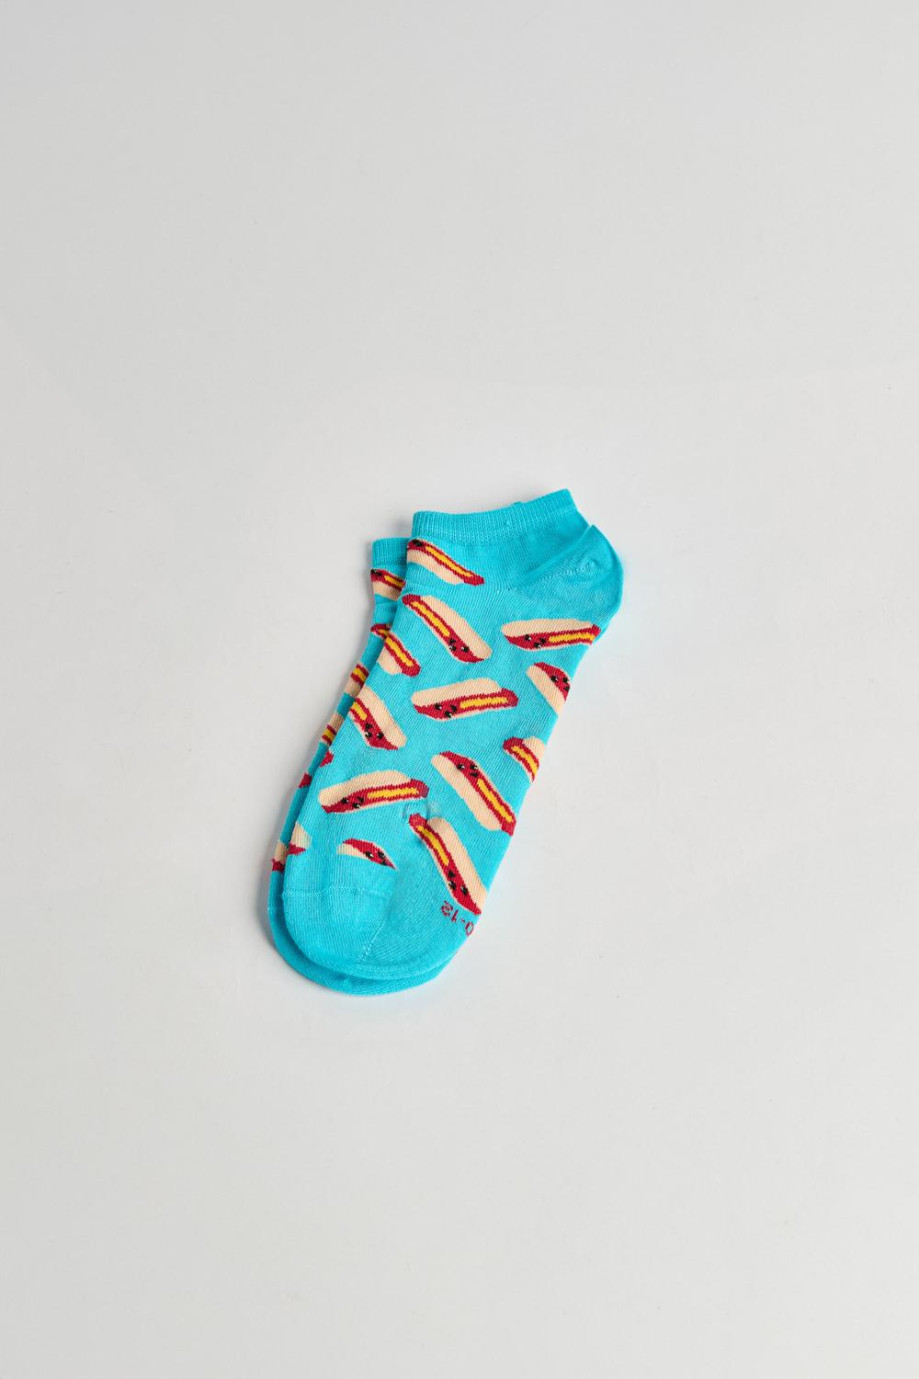 Medias azules claras tobilleras con diseños de hot dogs